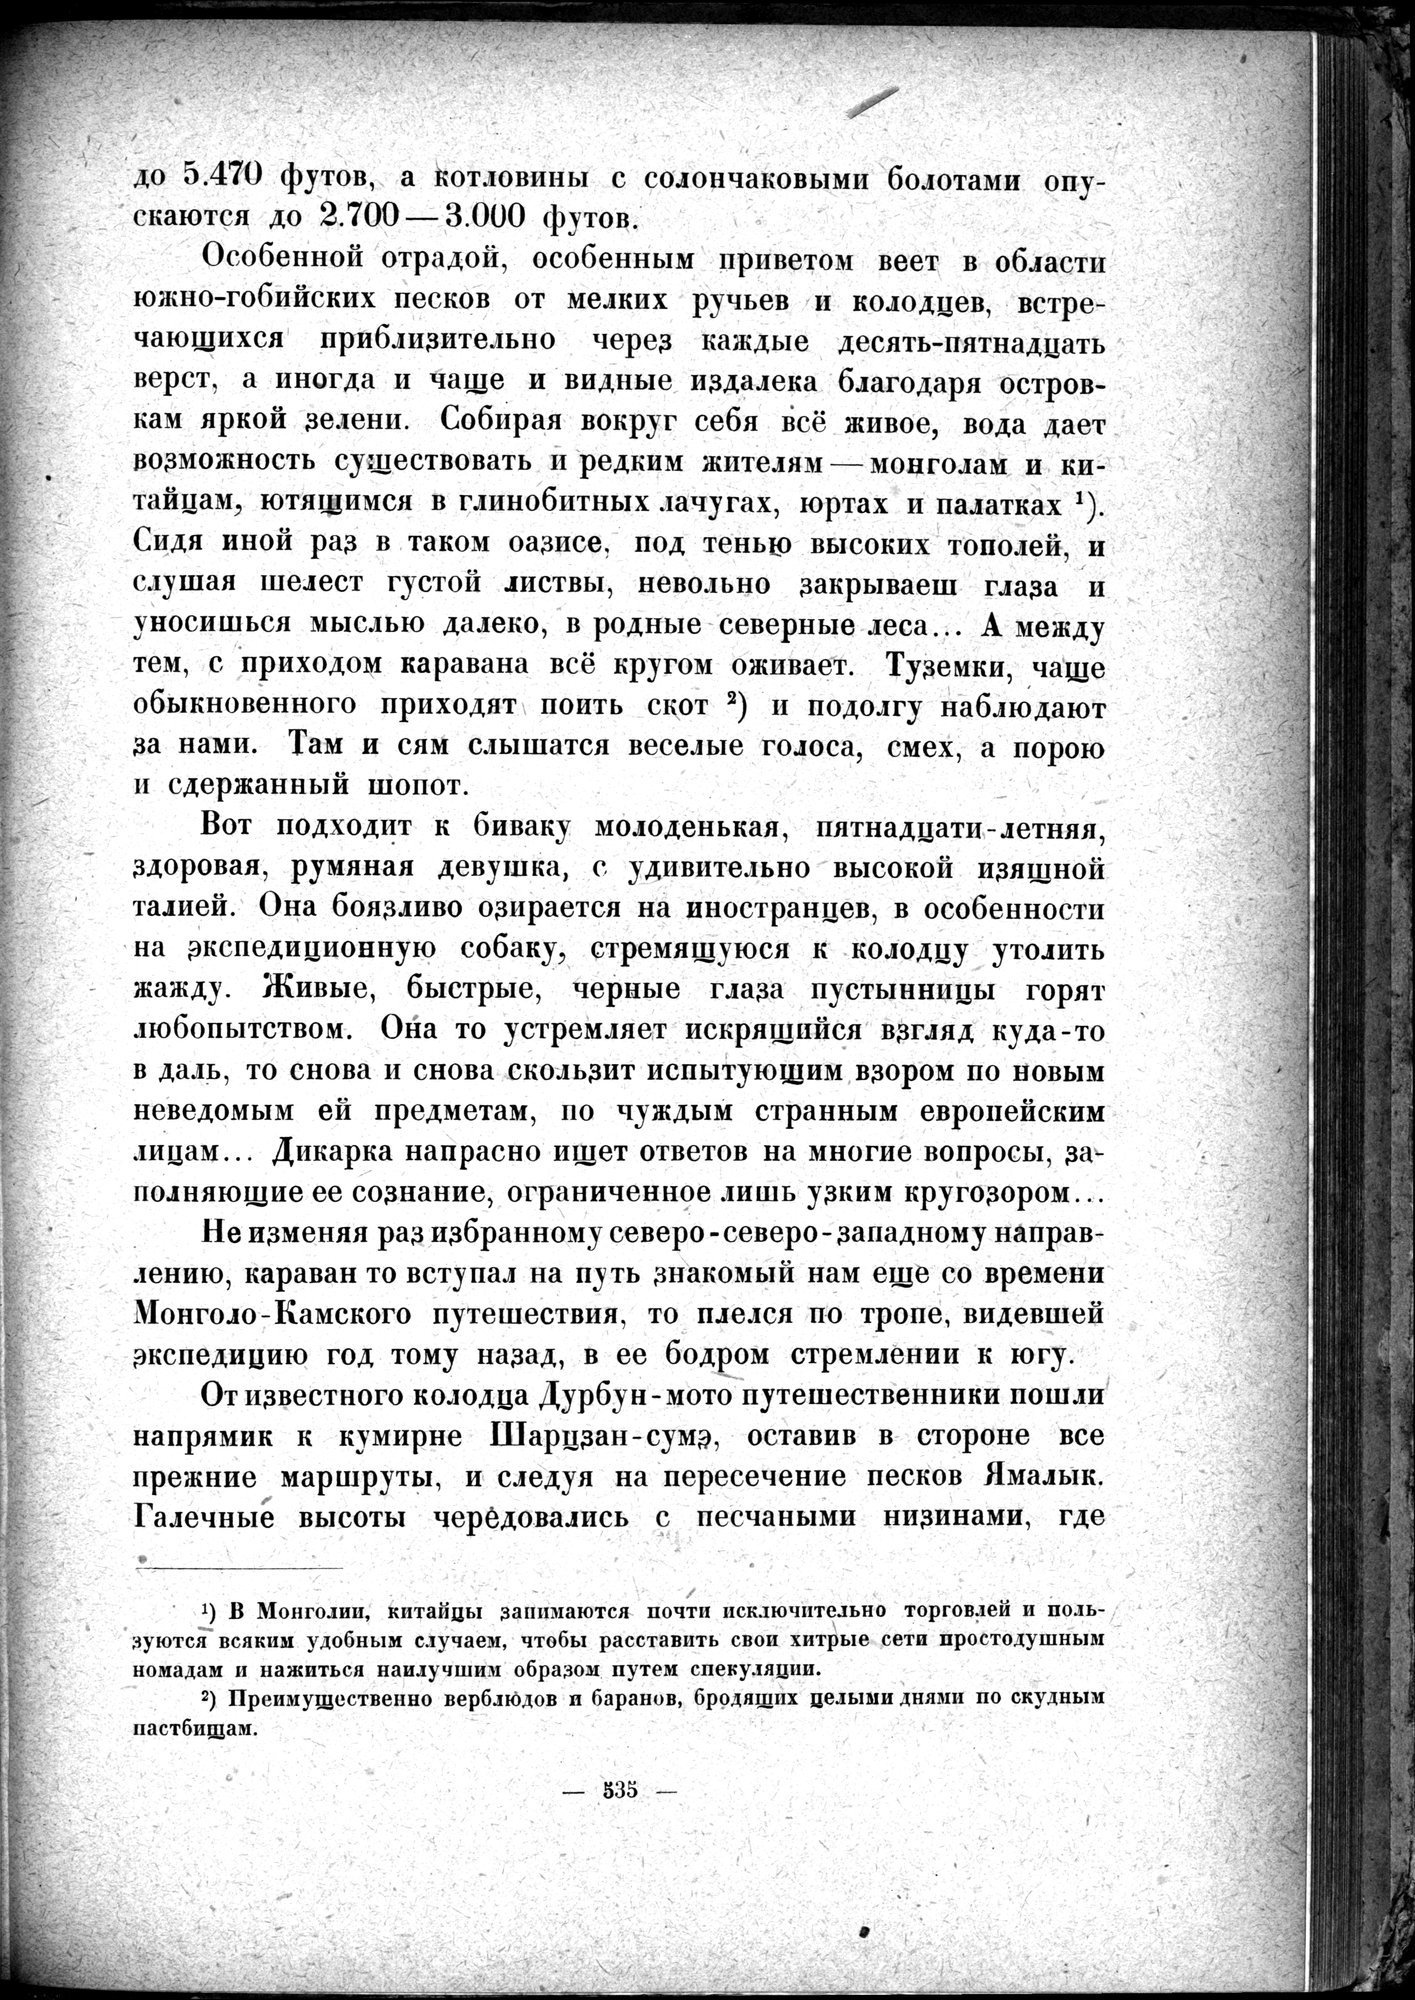 Mongoliya i Amdo i mertby gorod Khara-Khoto : vol.1 / Page 619 (Grayscale High Resolution Image)